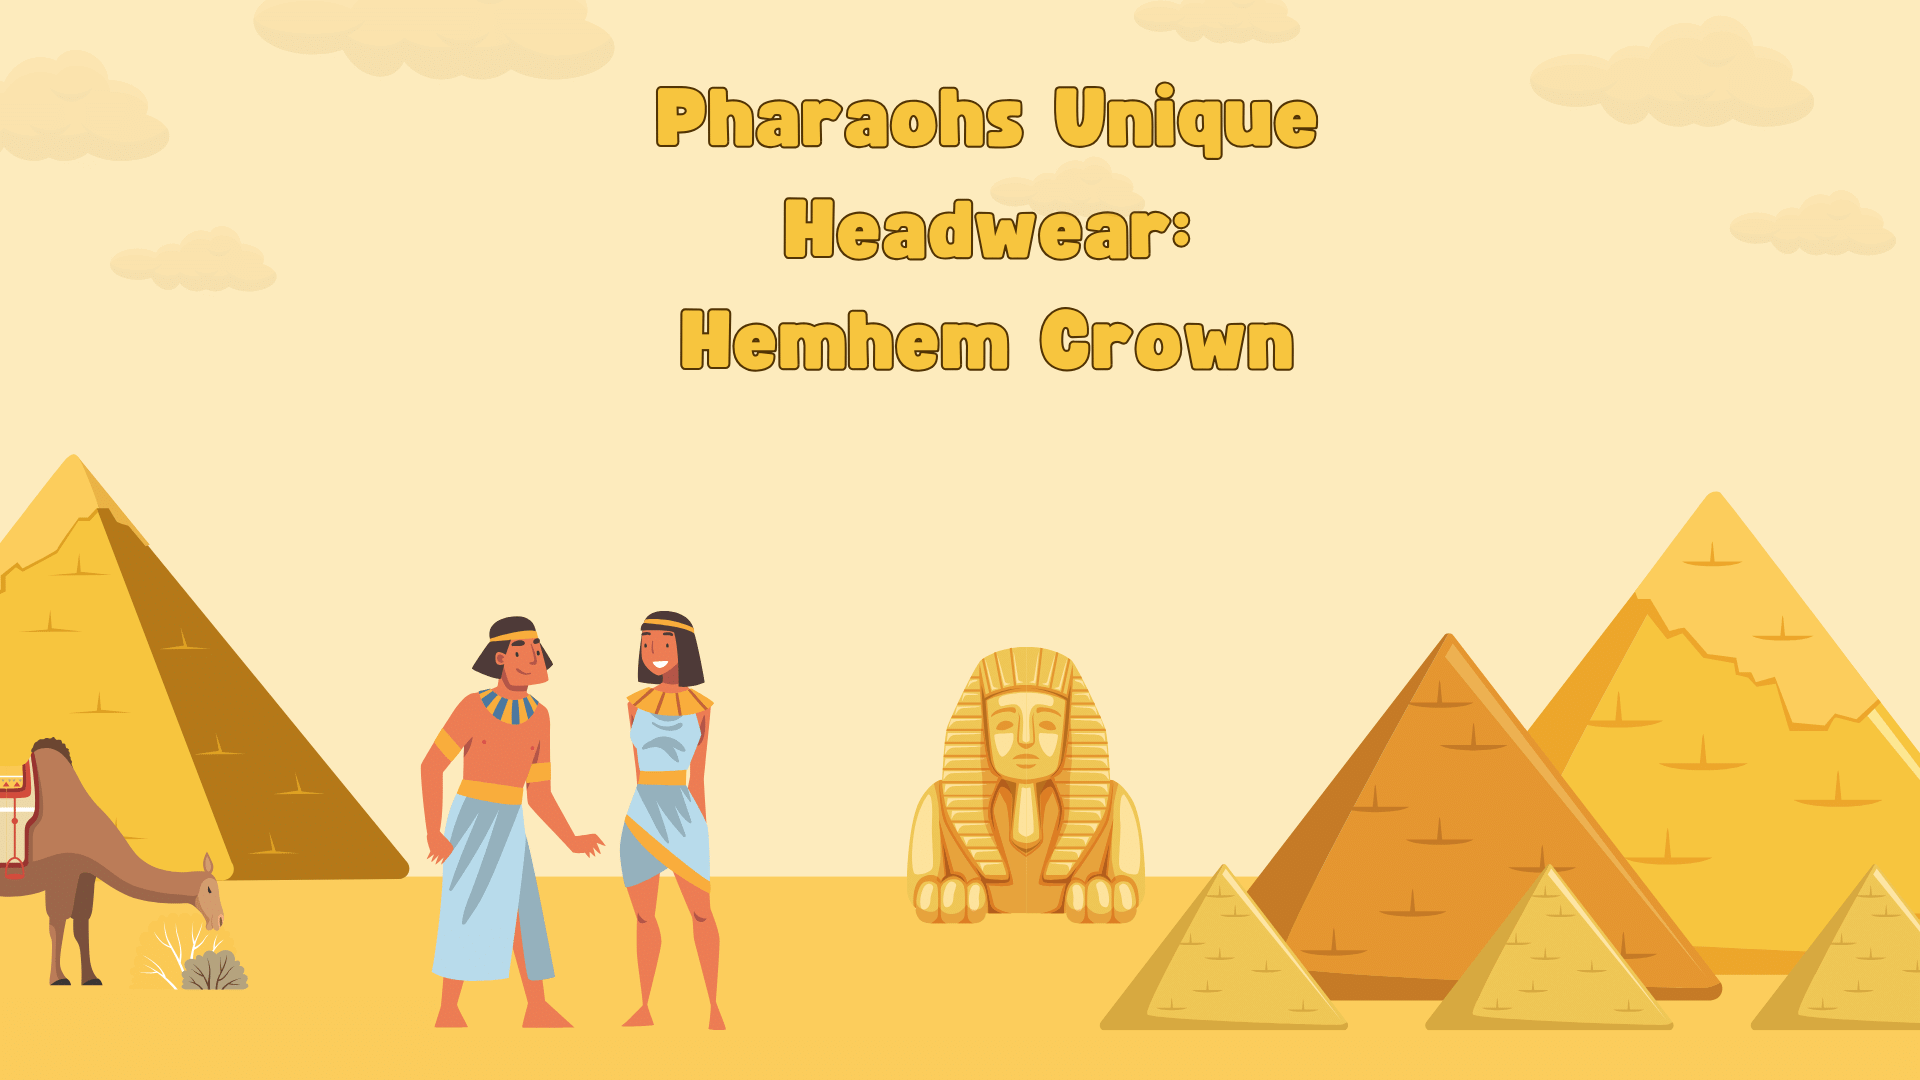 Pharaohs Unique Headwear: Hemhem Crown